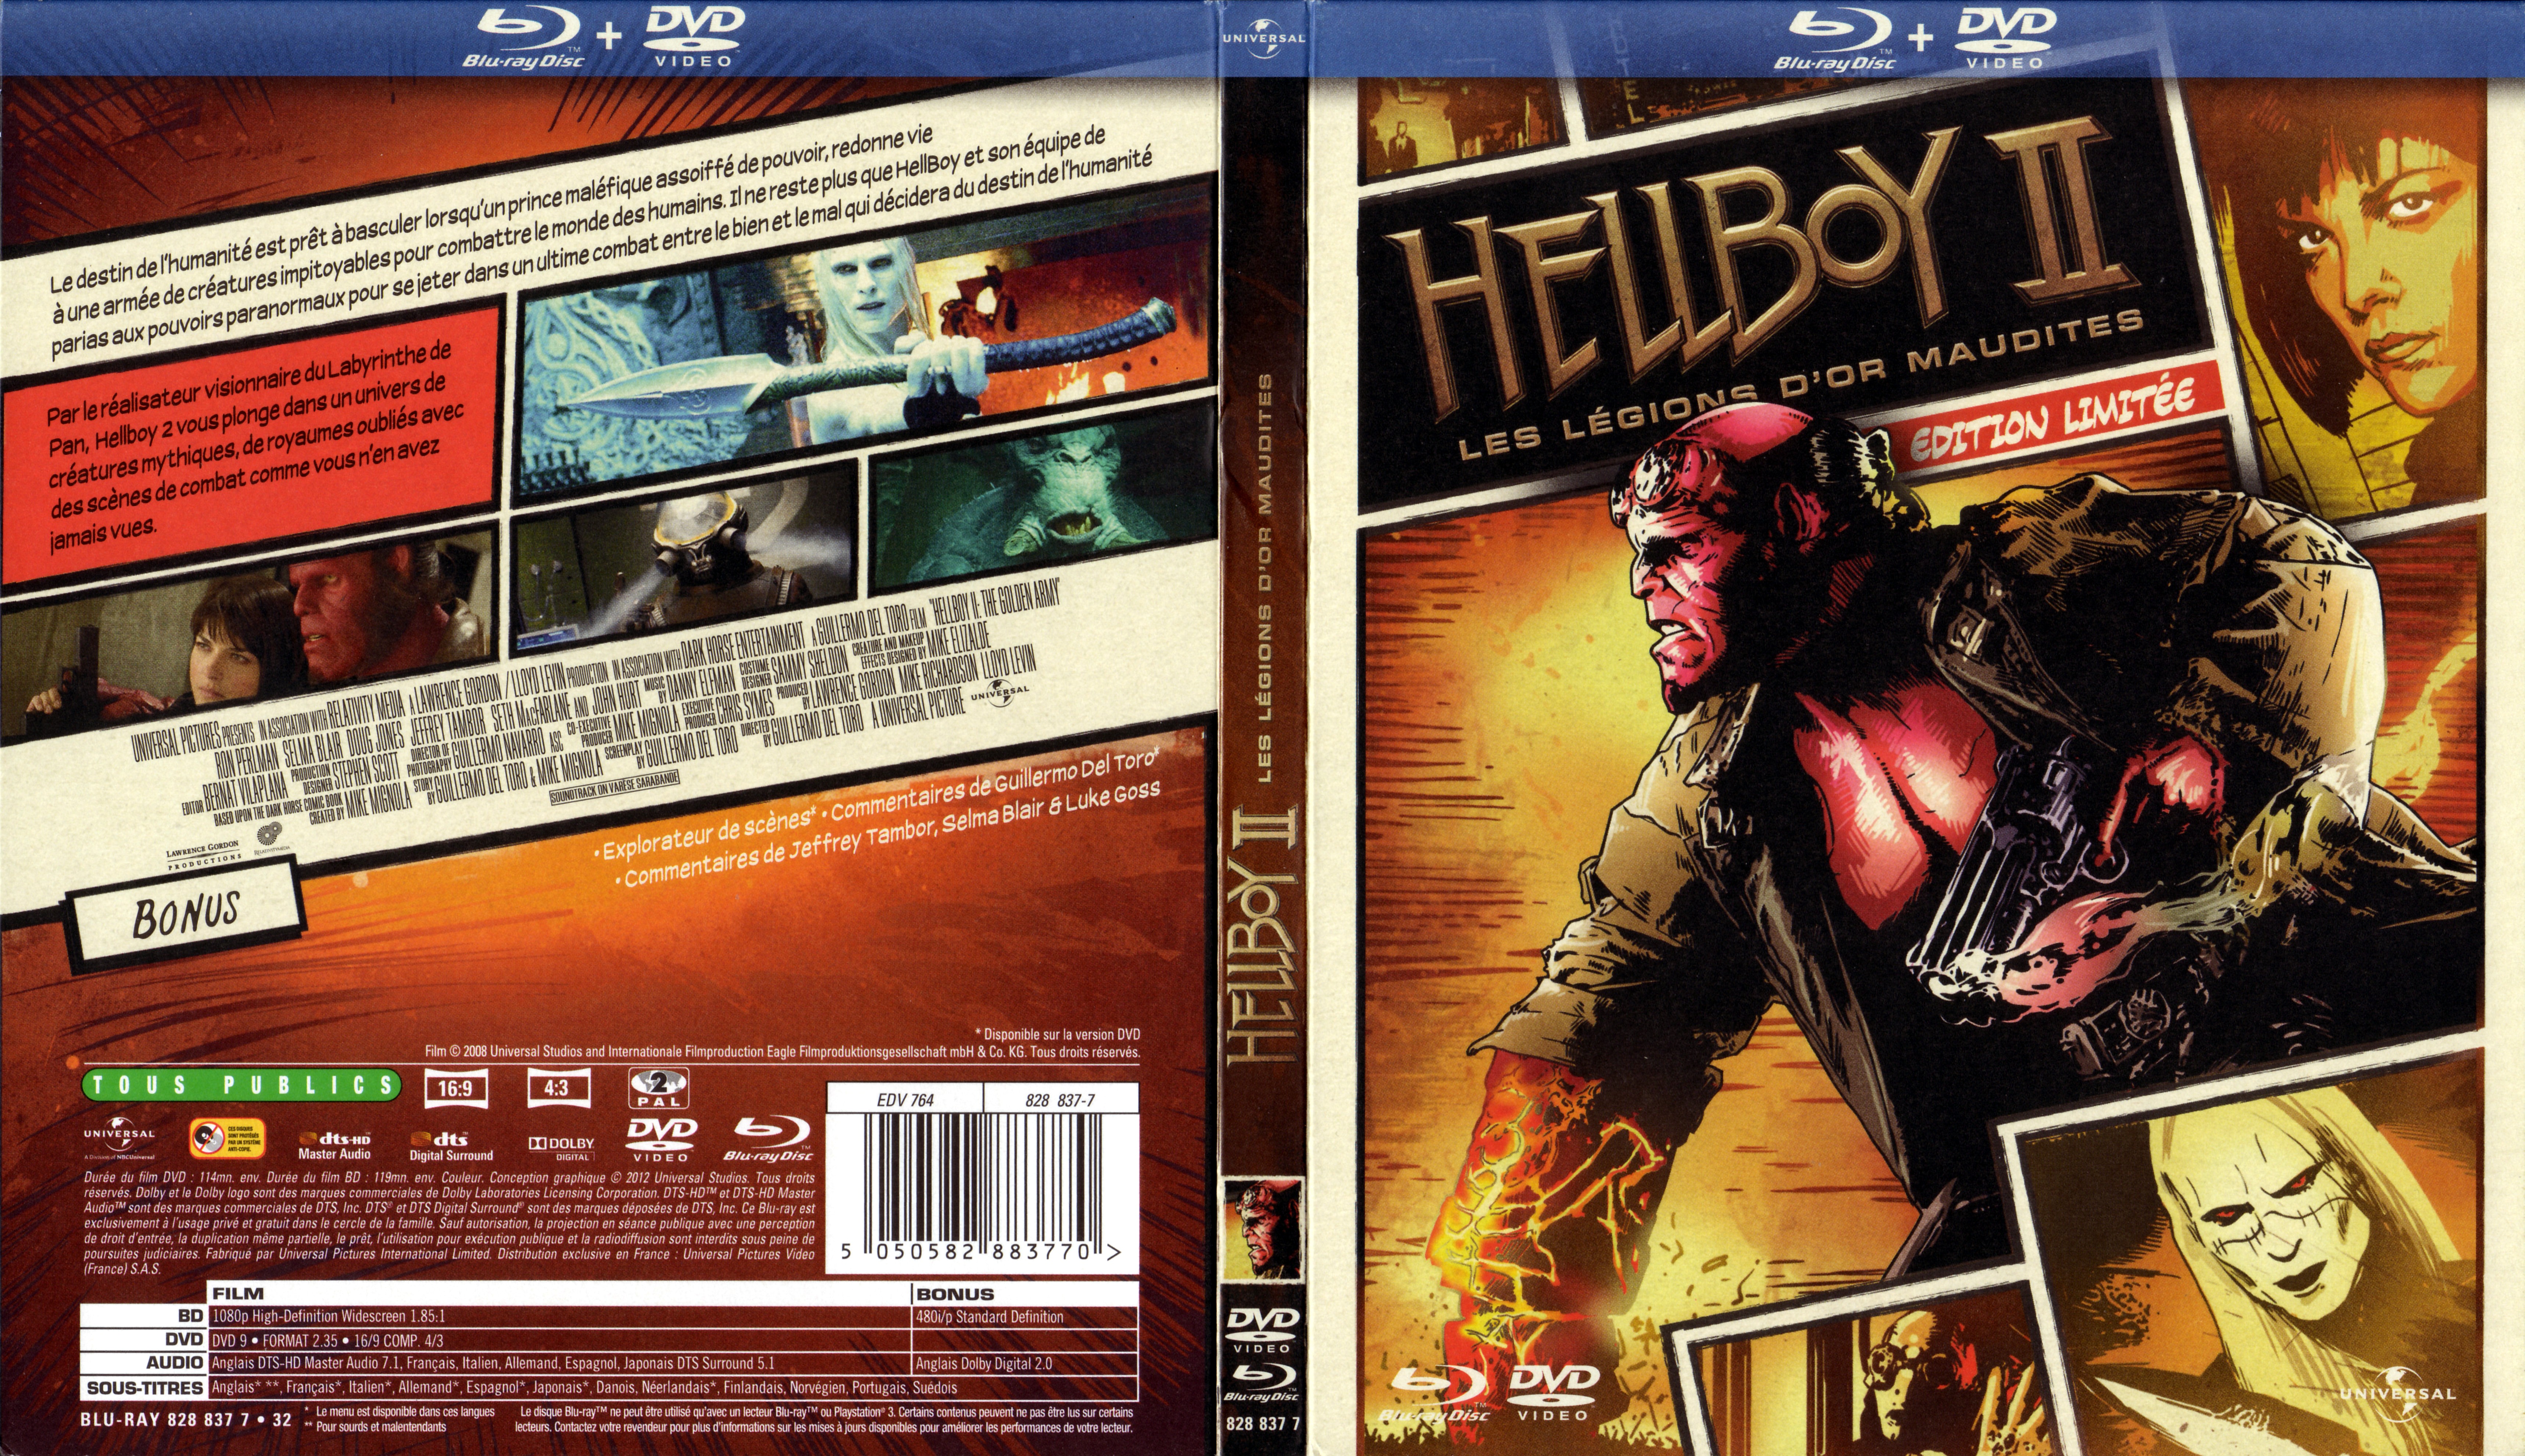 Jaquette DVD Hellboy 2 (BLU-RAY) v2